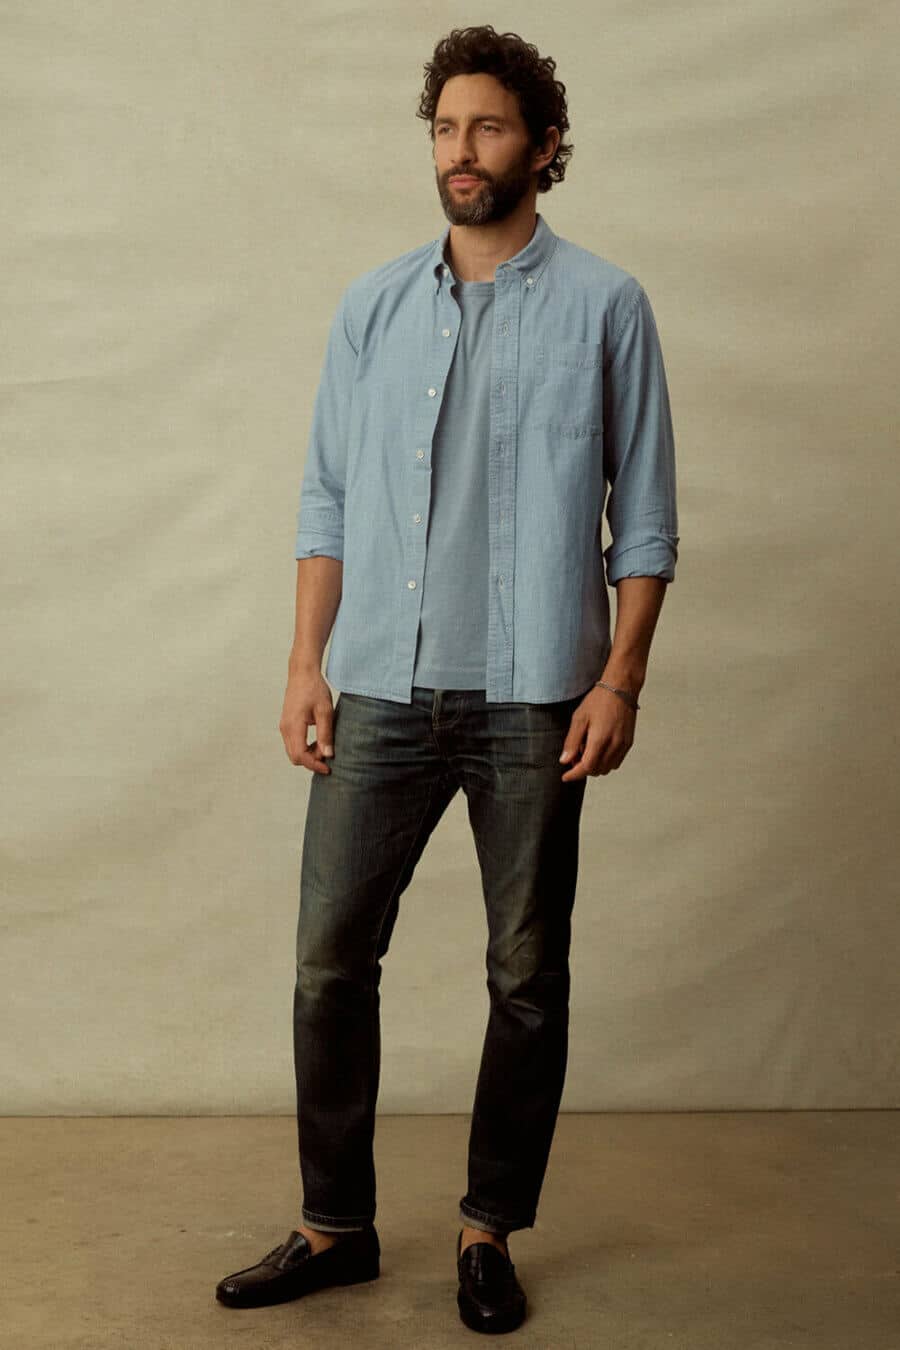 Men's tonal double denim outfit - light blue shirt and dark jeans